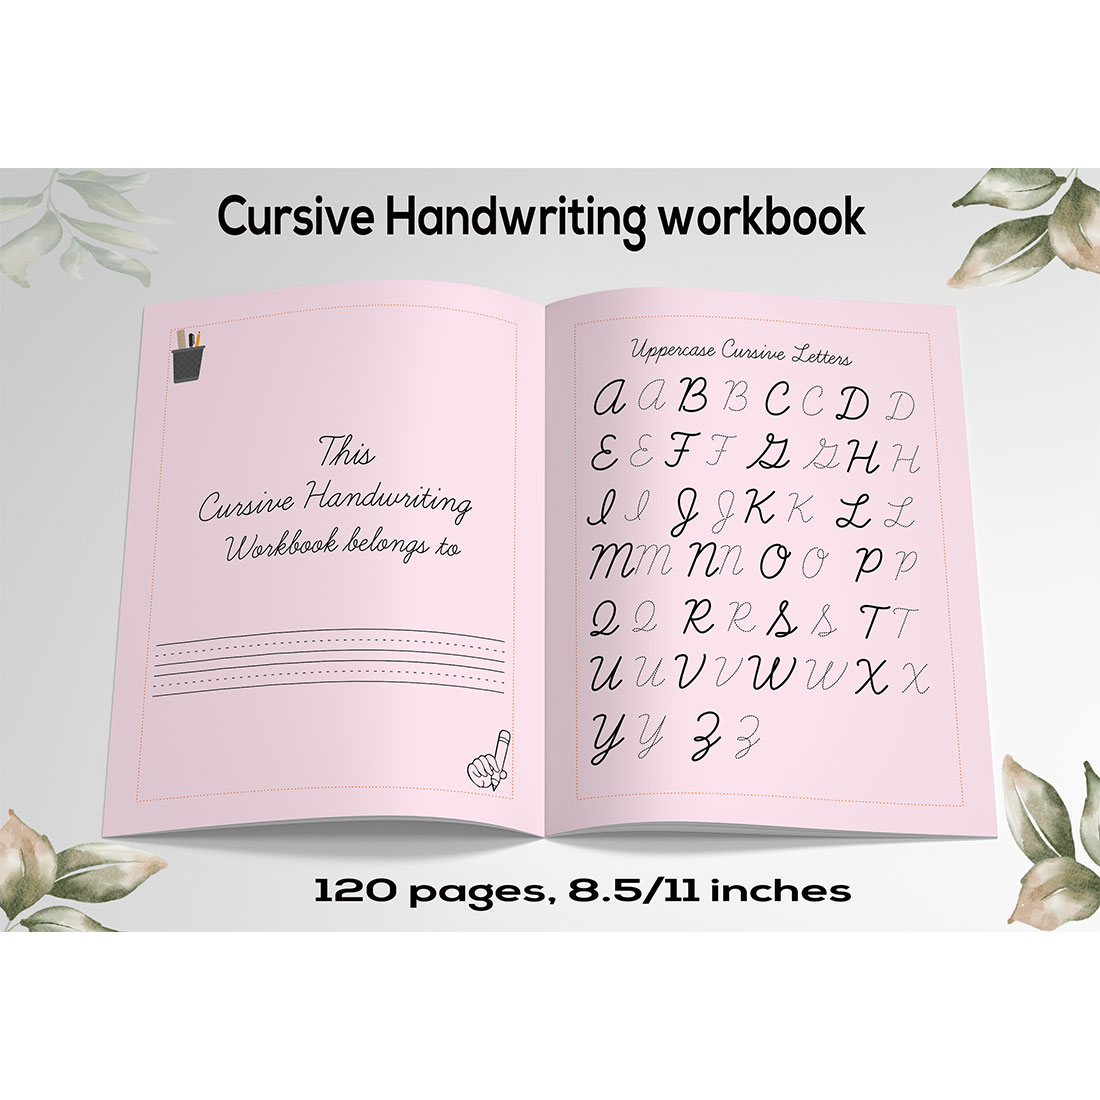 Cursive Handwriting workbook cover image.